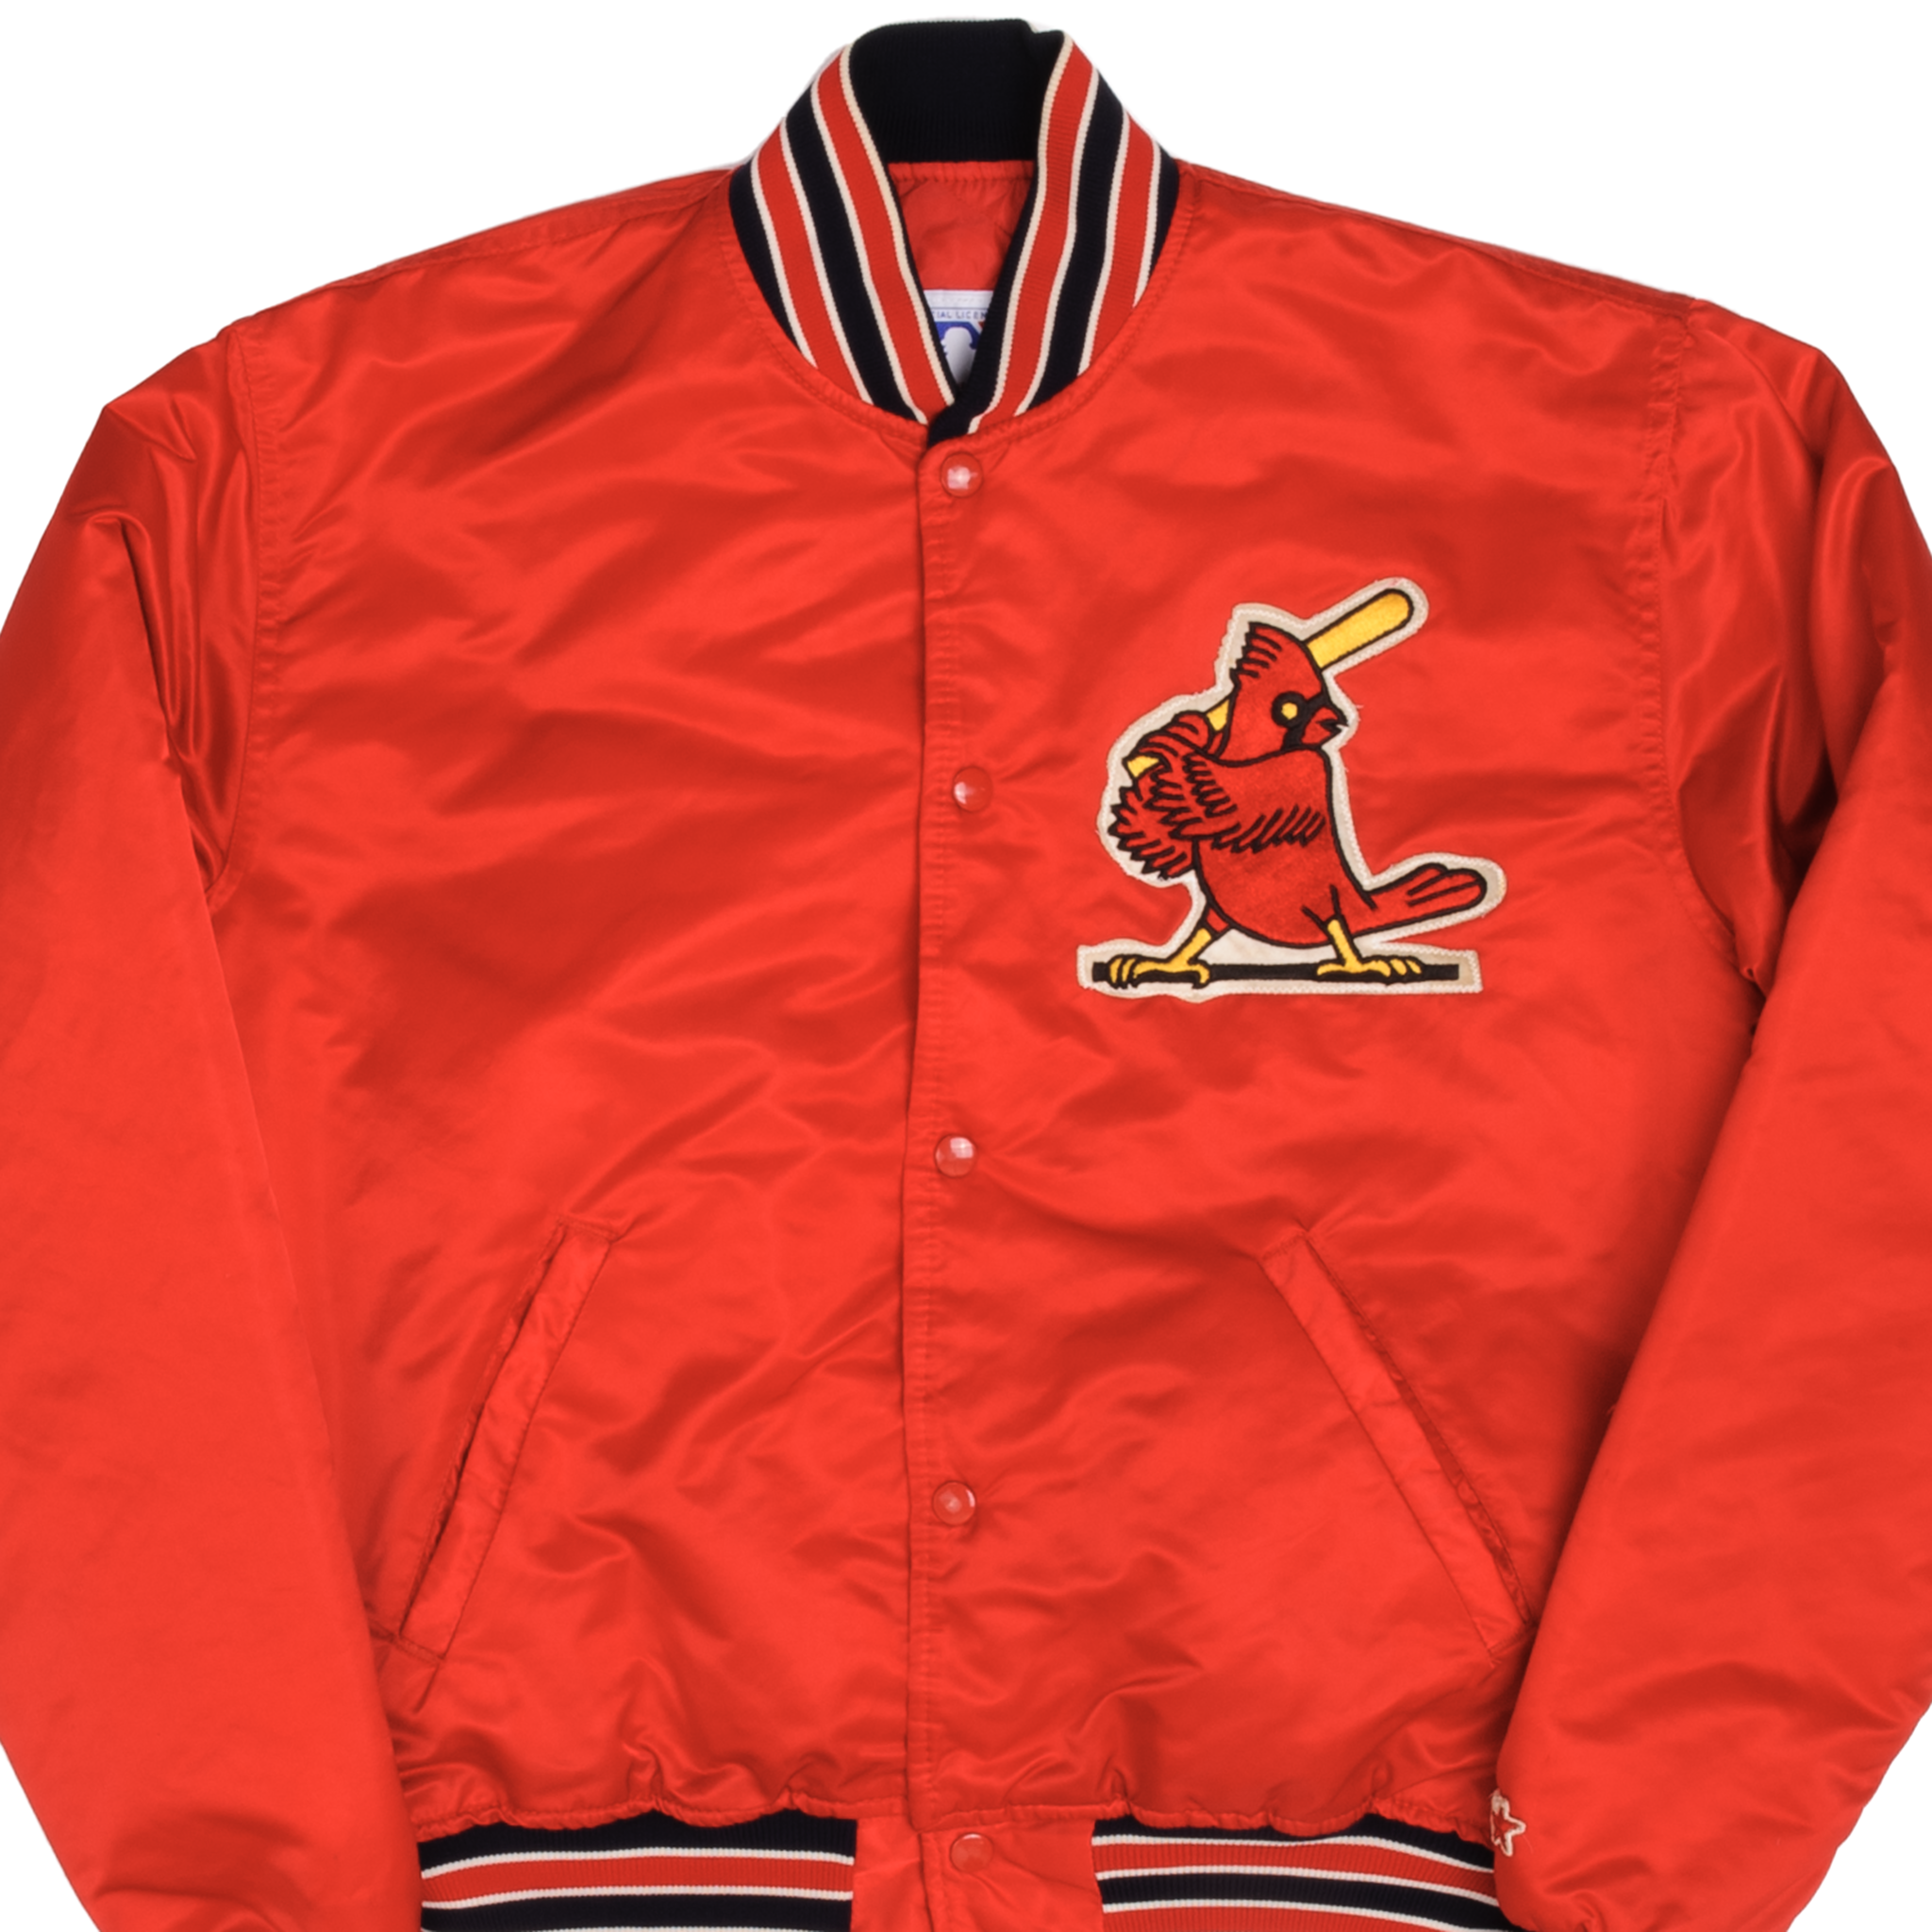 Vintage Rare Starter Brand St louis Cardinals Baseball Jersey Long